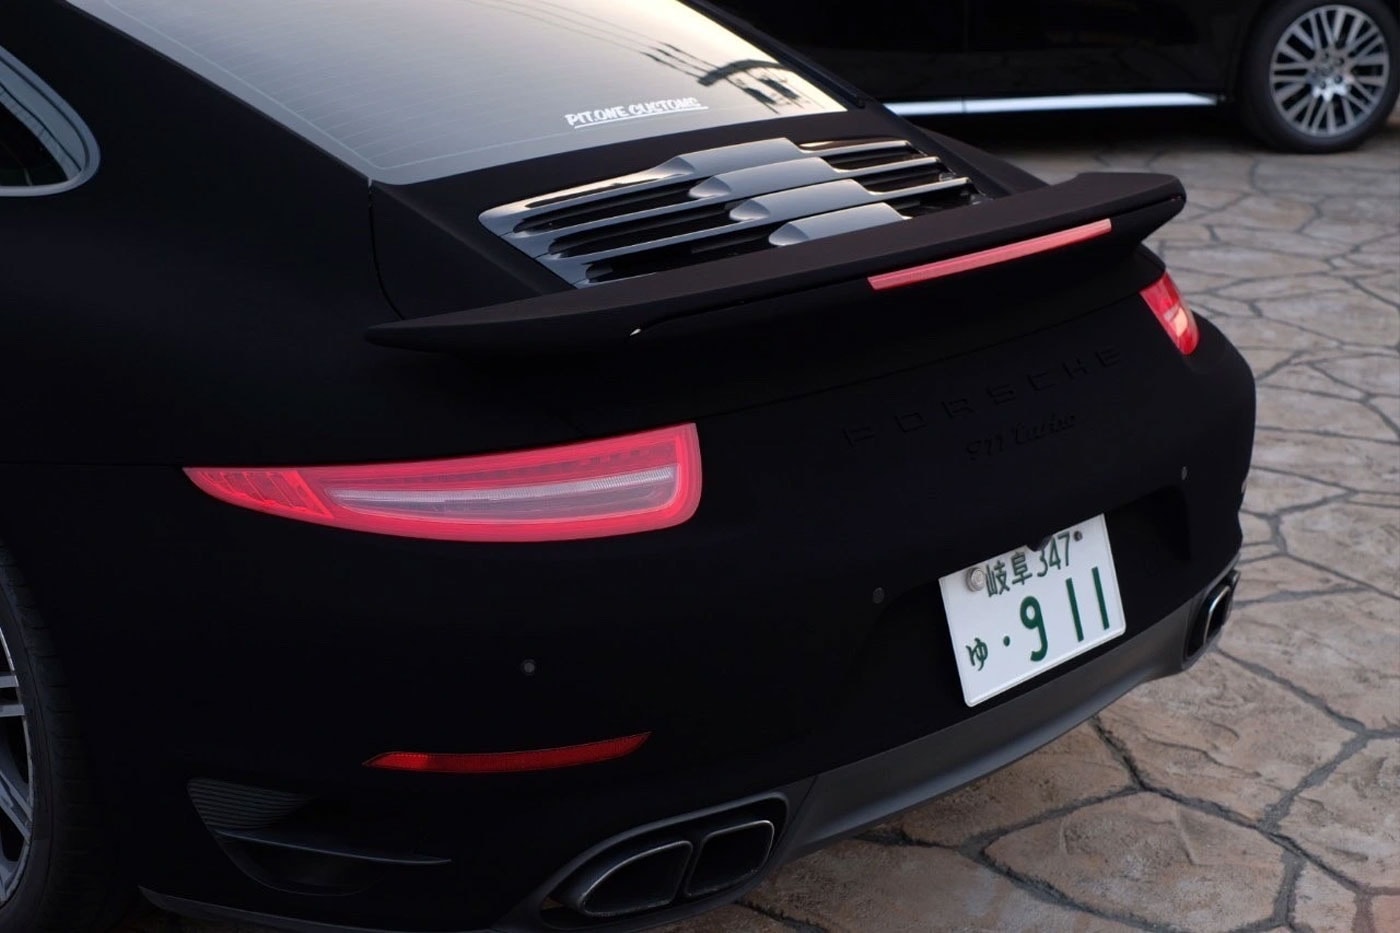 Pit One Covers a Porsche 911 in the World's Blackest Paint koyo orient auto shop darkest car video vantablack purchase test info